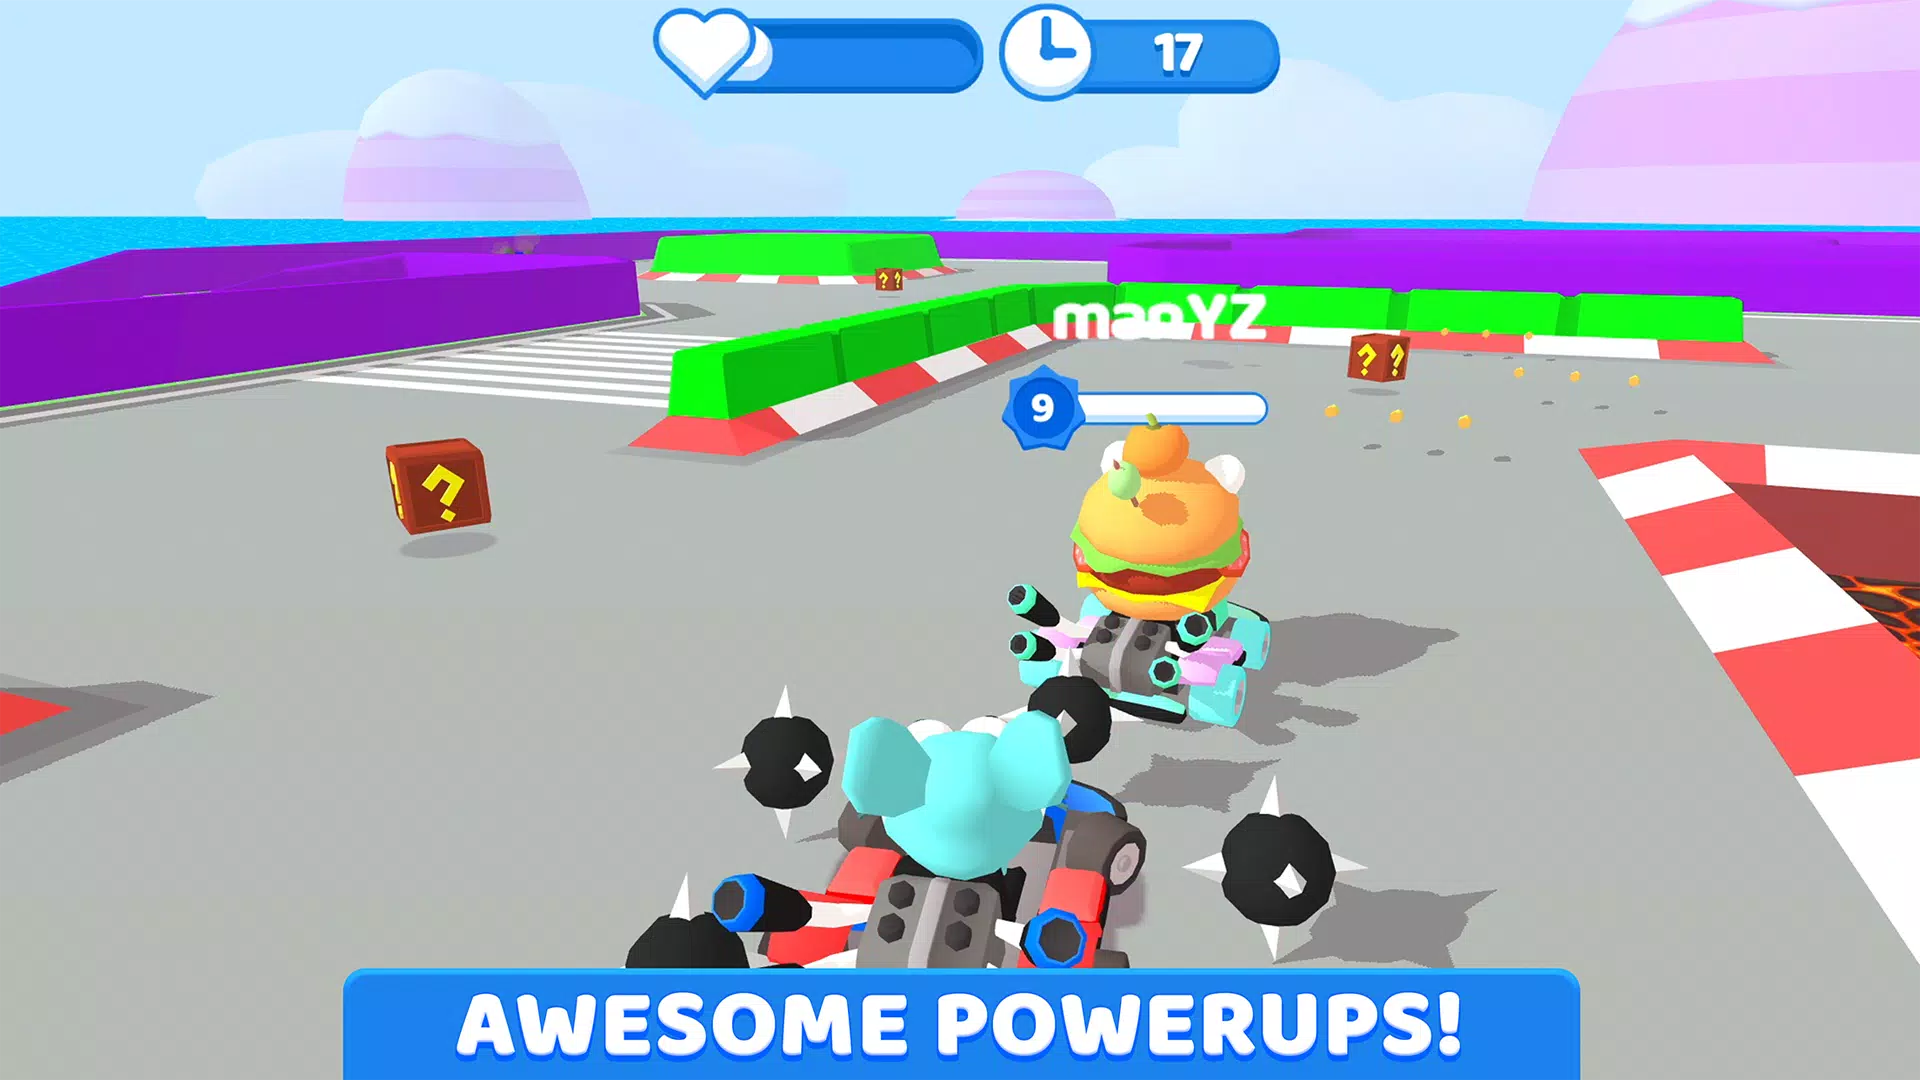 Smash Karts APK for Android Download